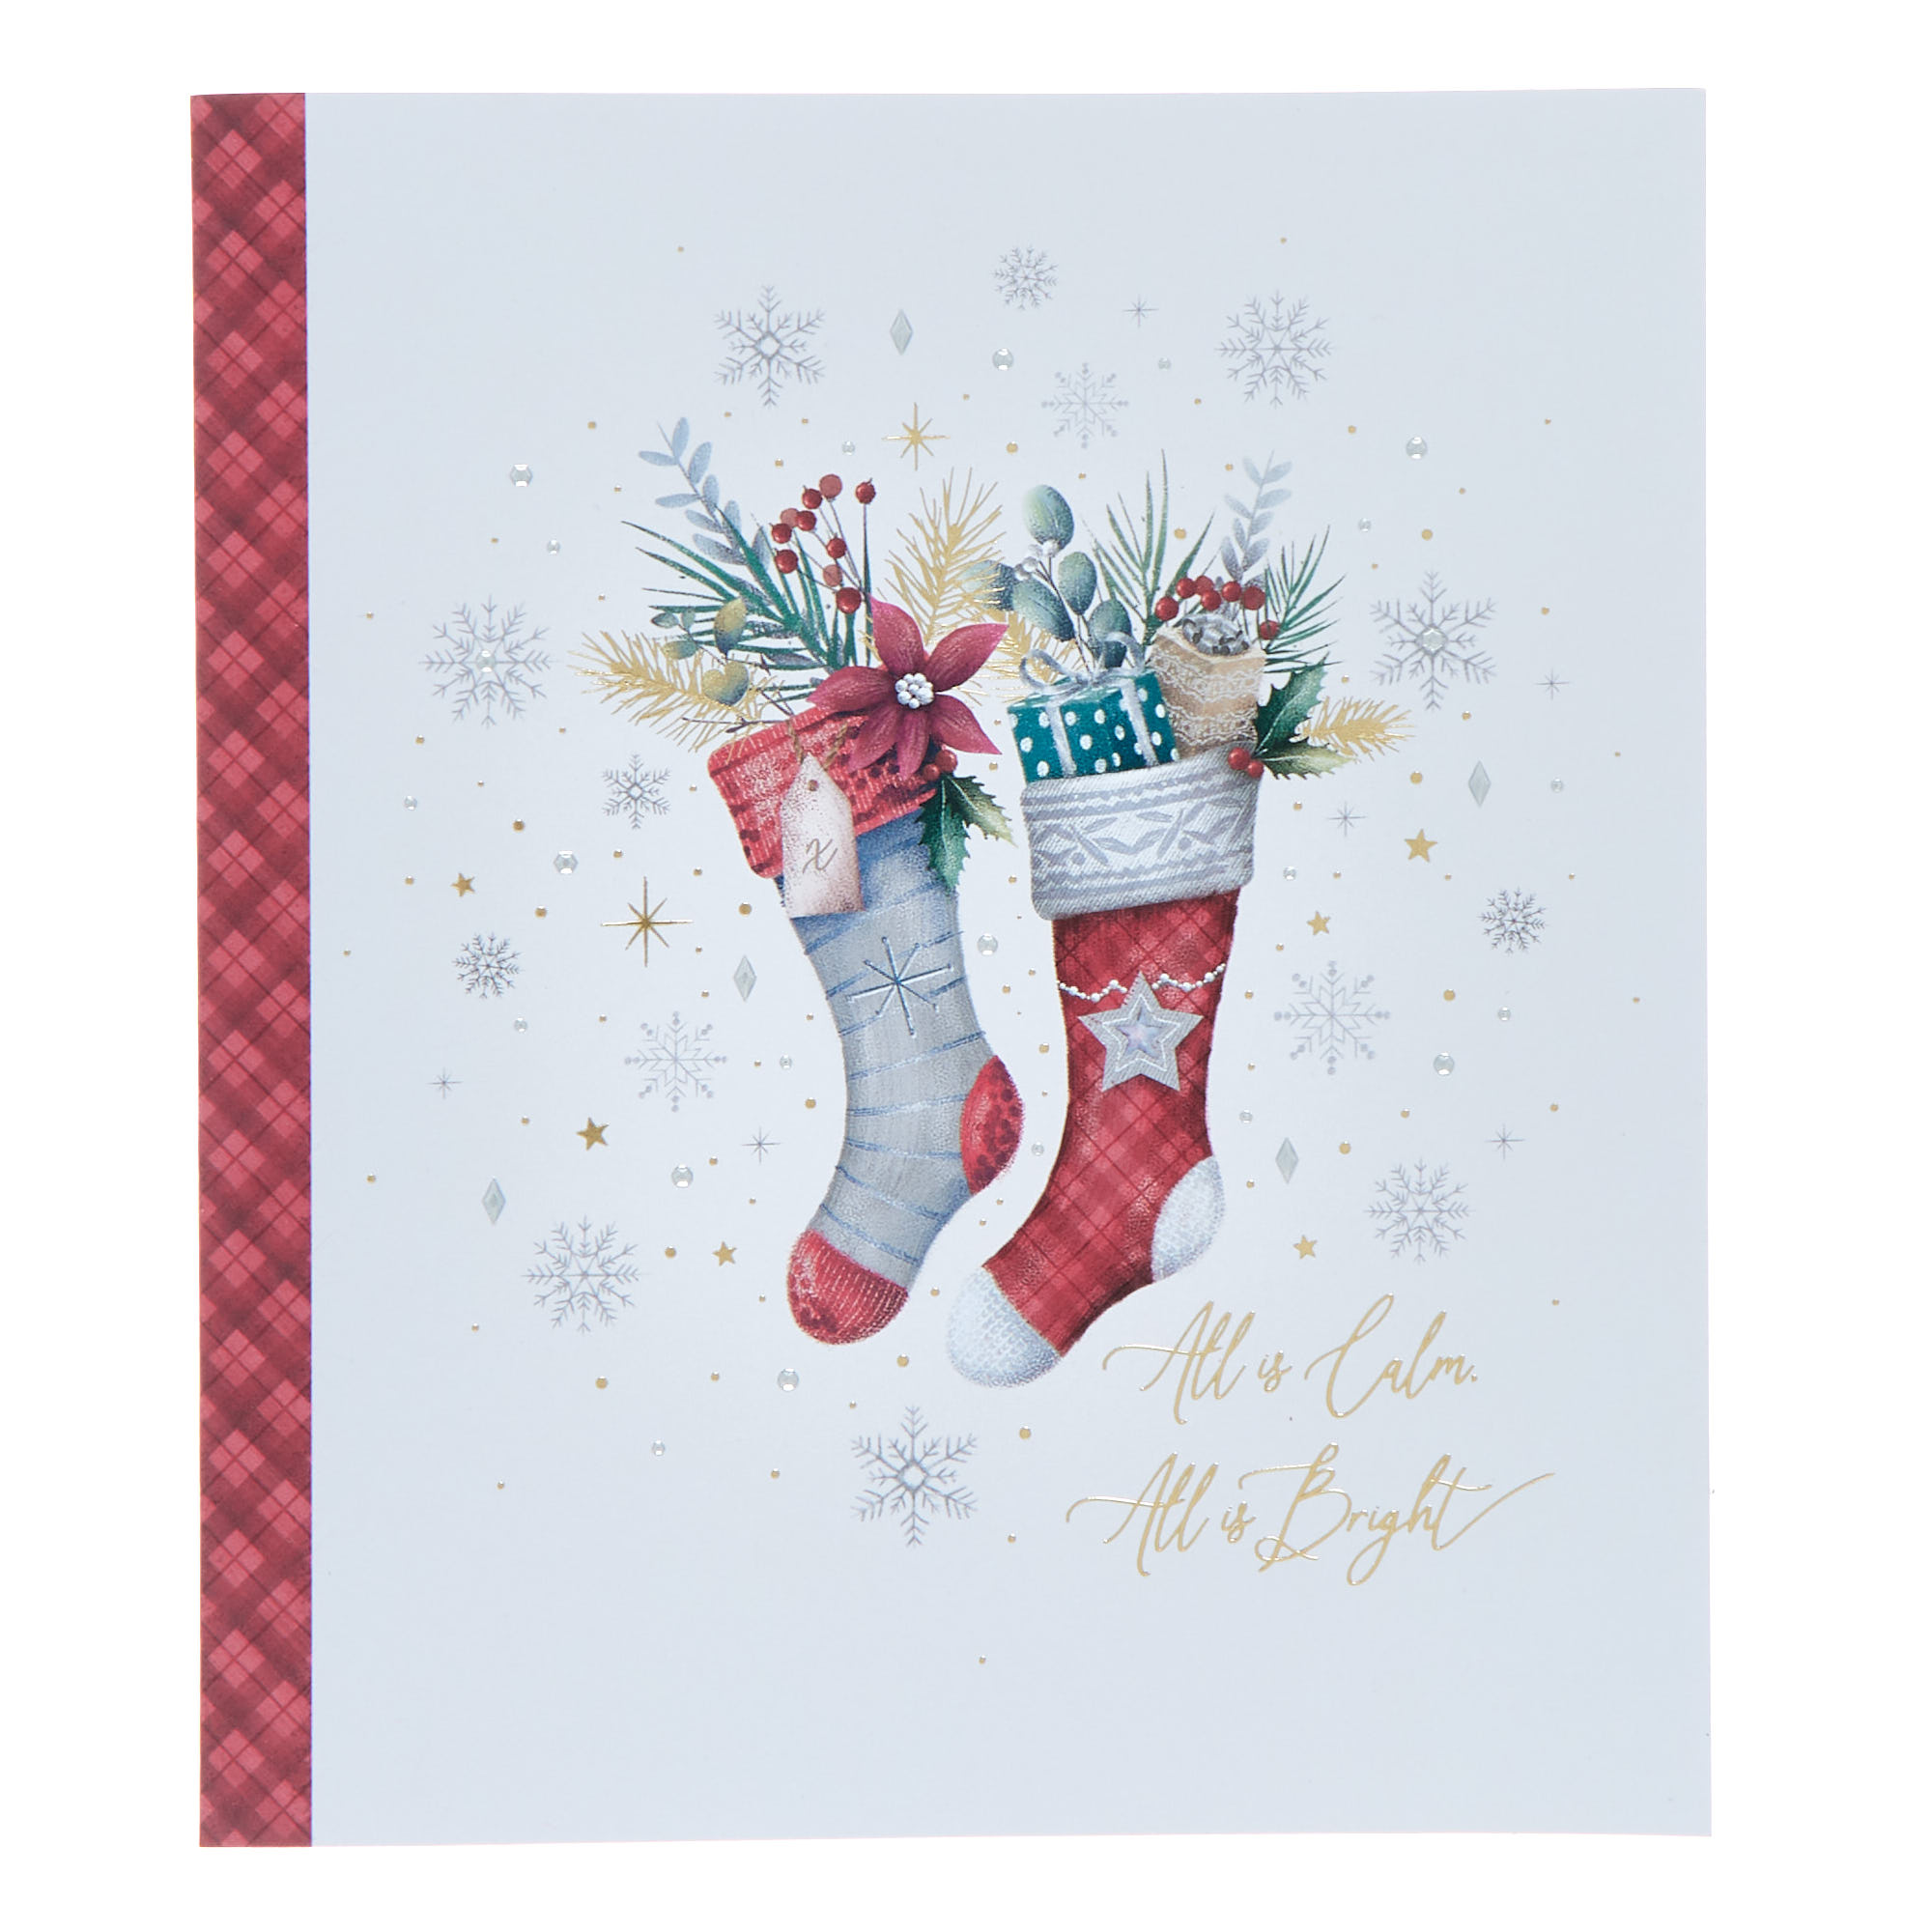 10 Premium Boxed Charity Christmas Cards - Lyrics (2 Designs)